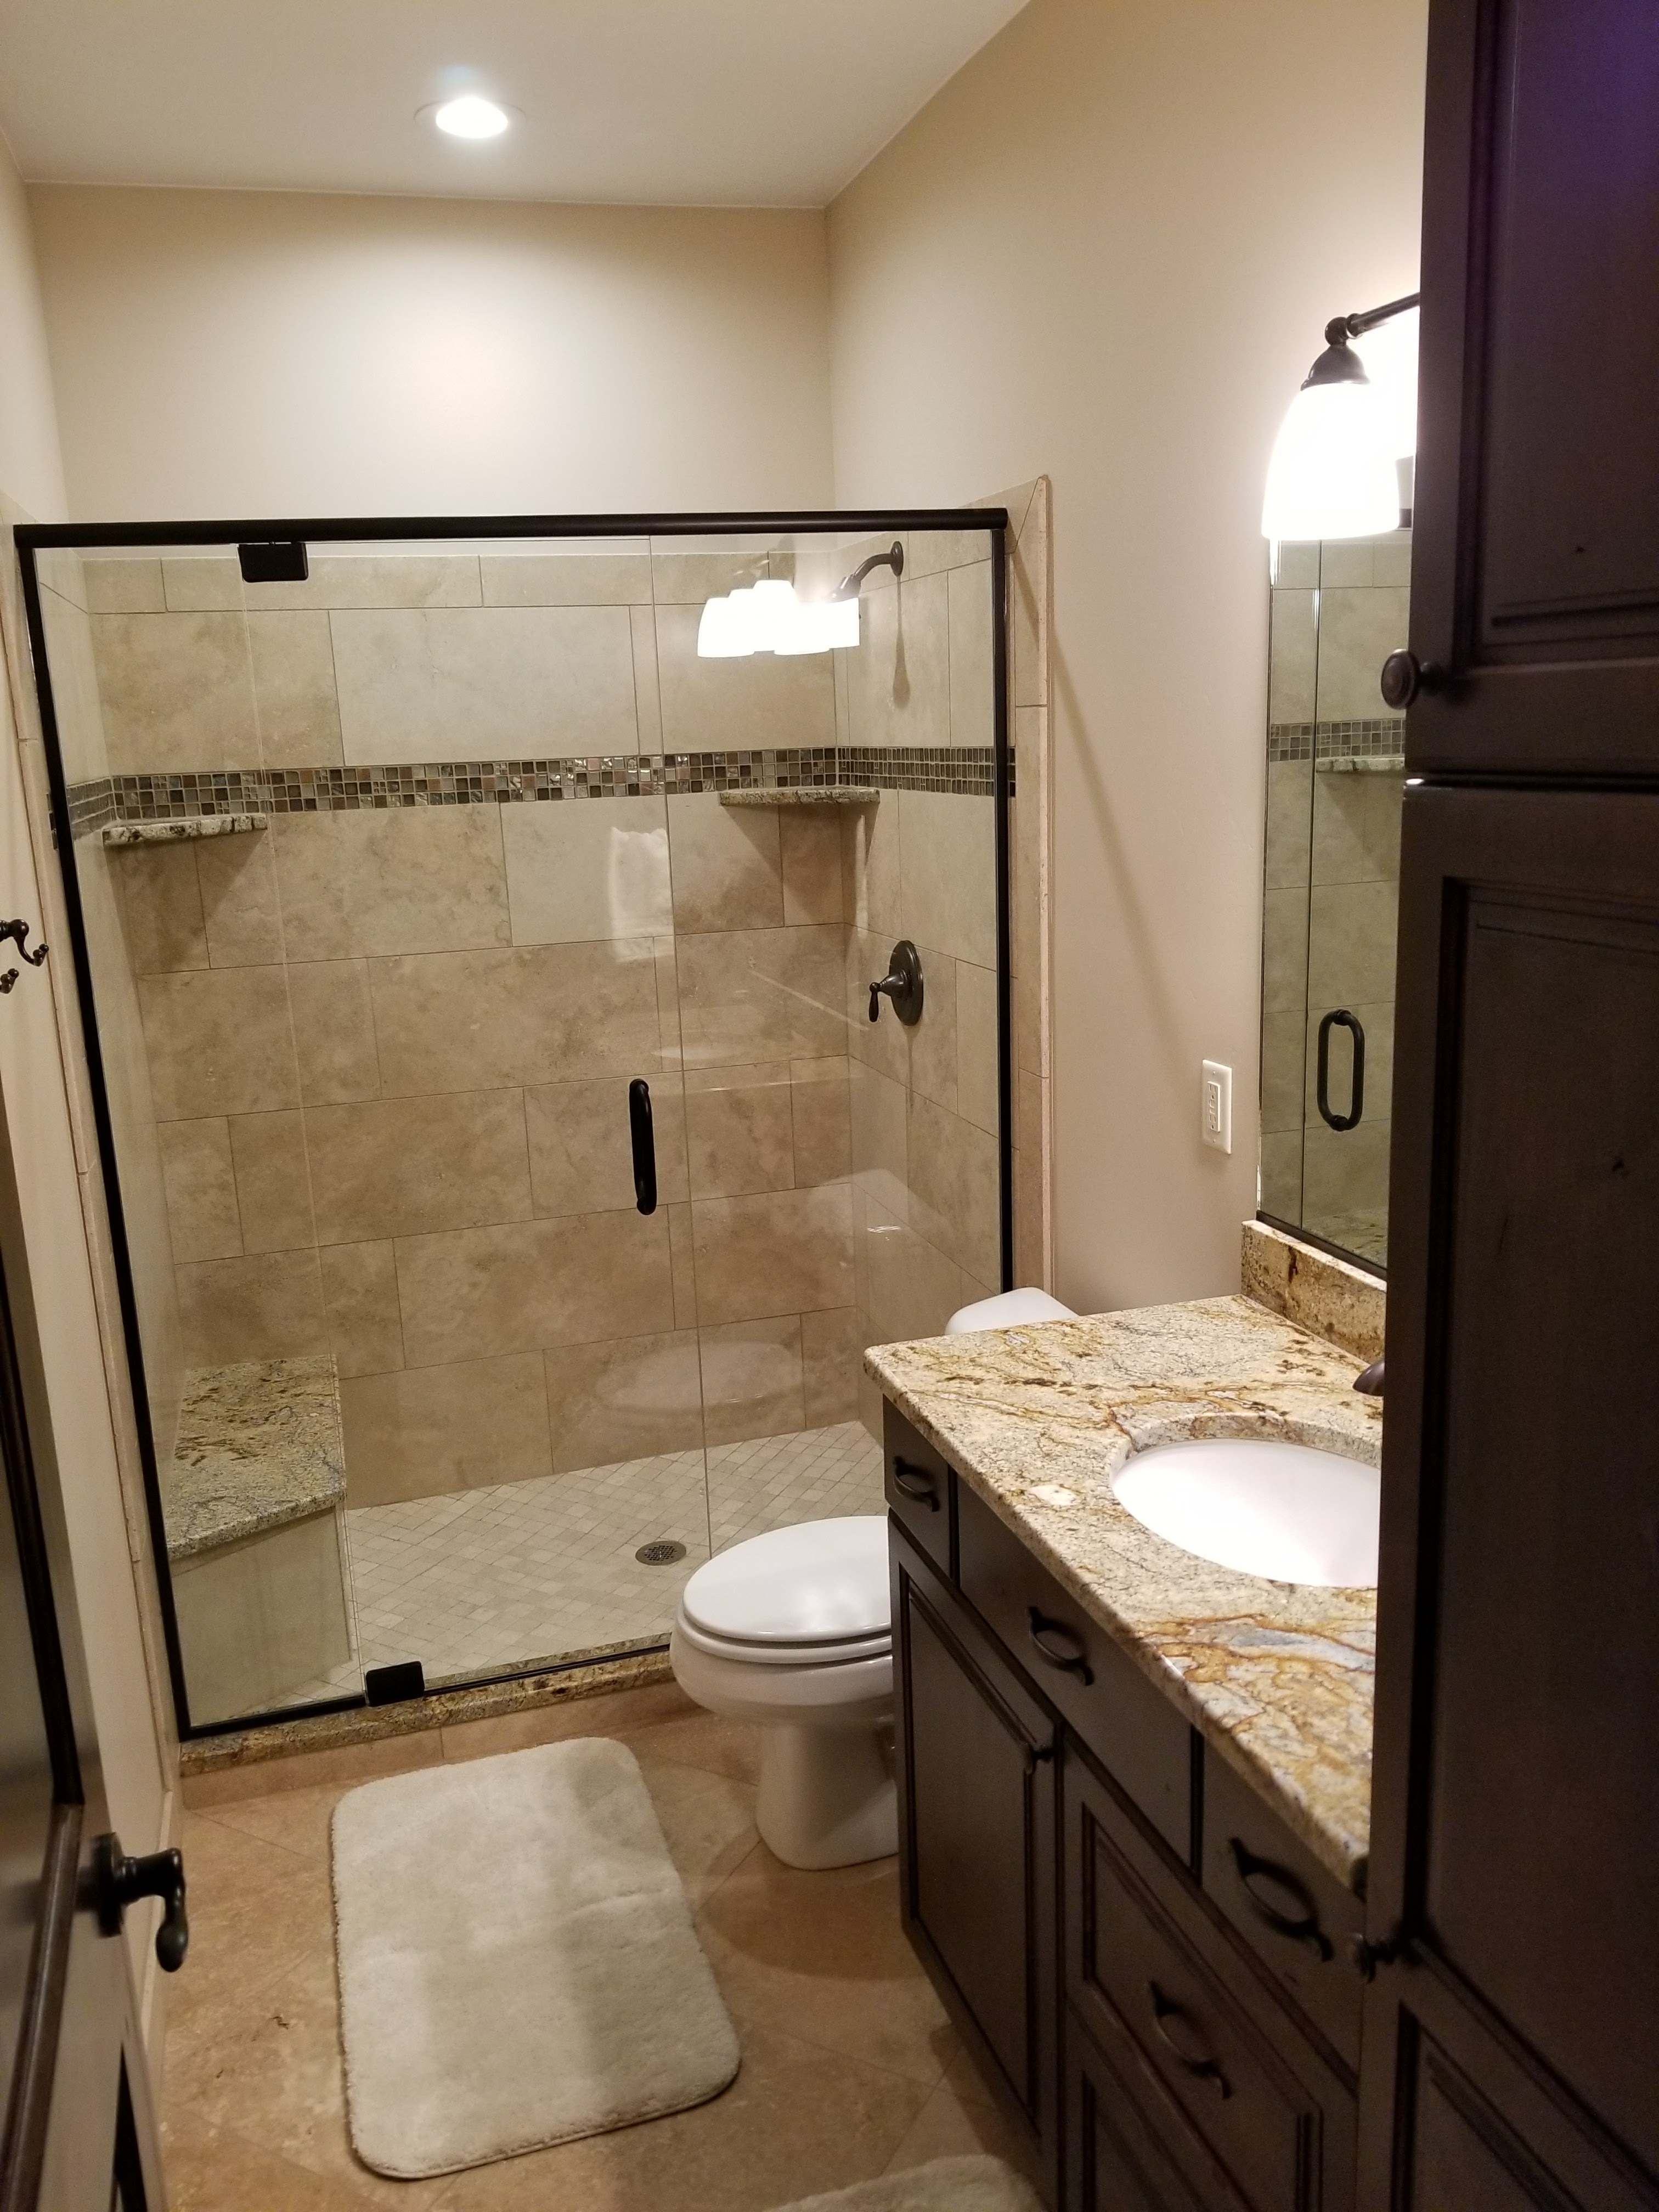 Bathrooms - Pristine Tiles